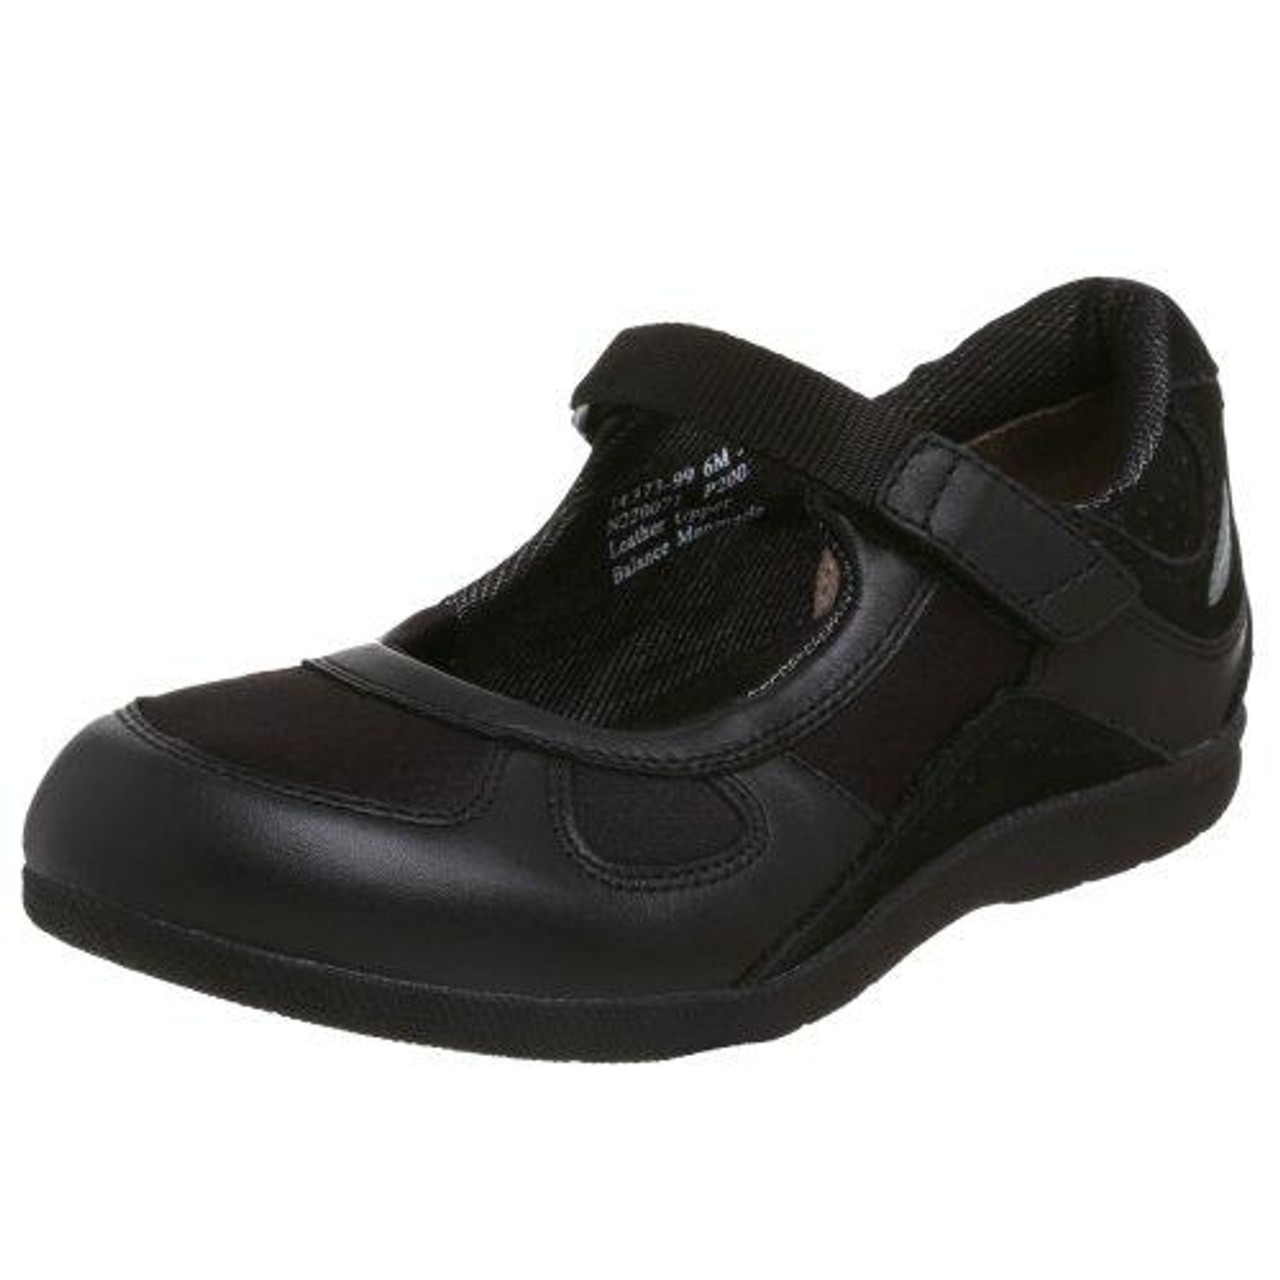 Drew Delite - Black Calf/Black Stretch Mary Jane Women Shoes - 14373 ...